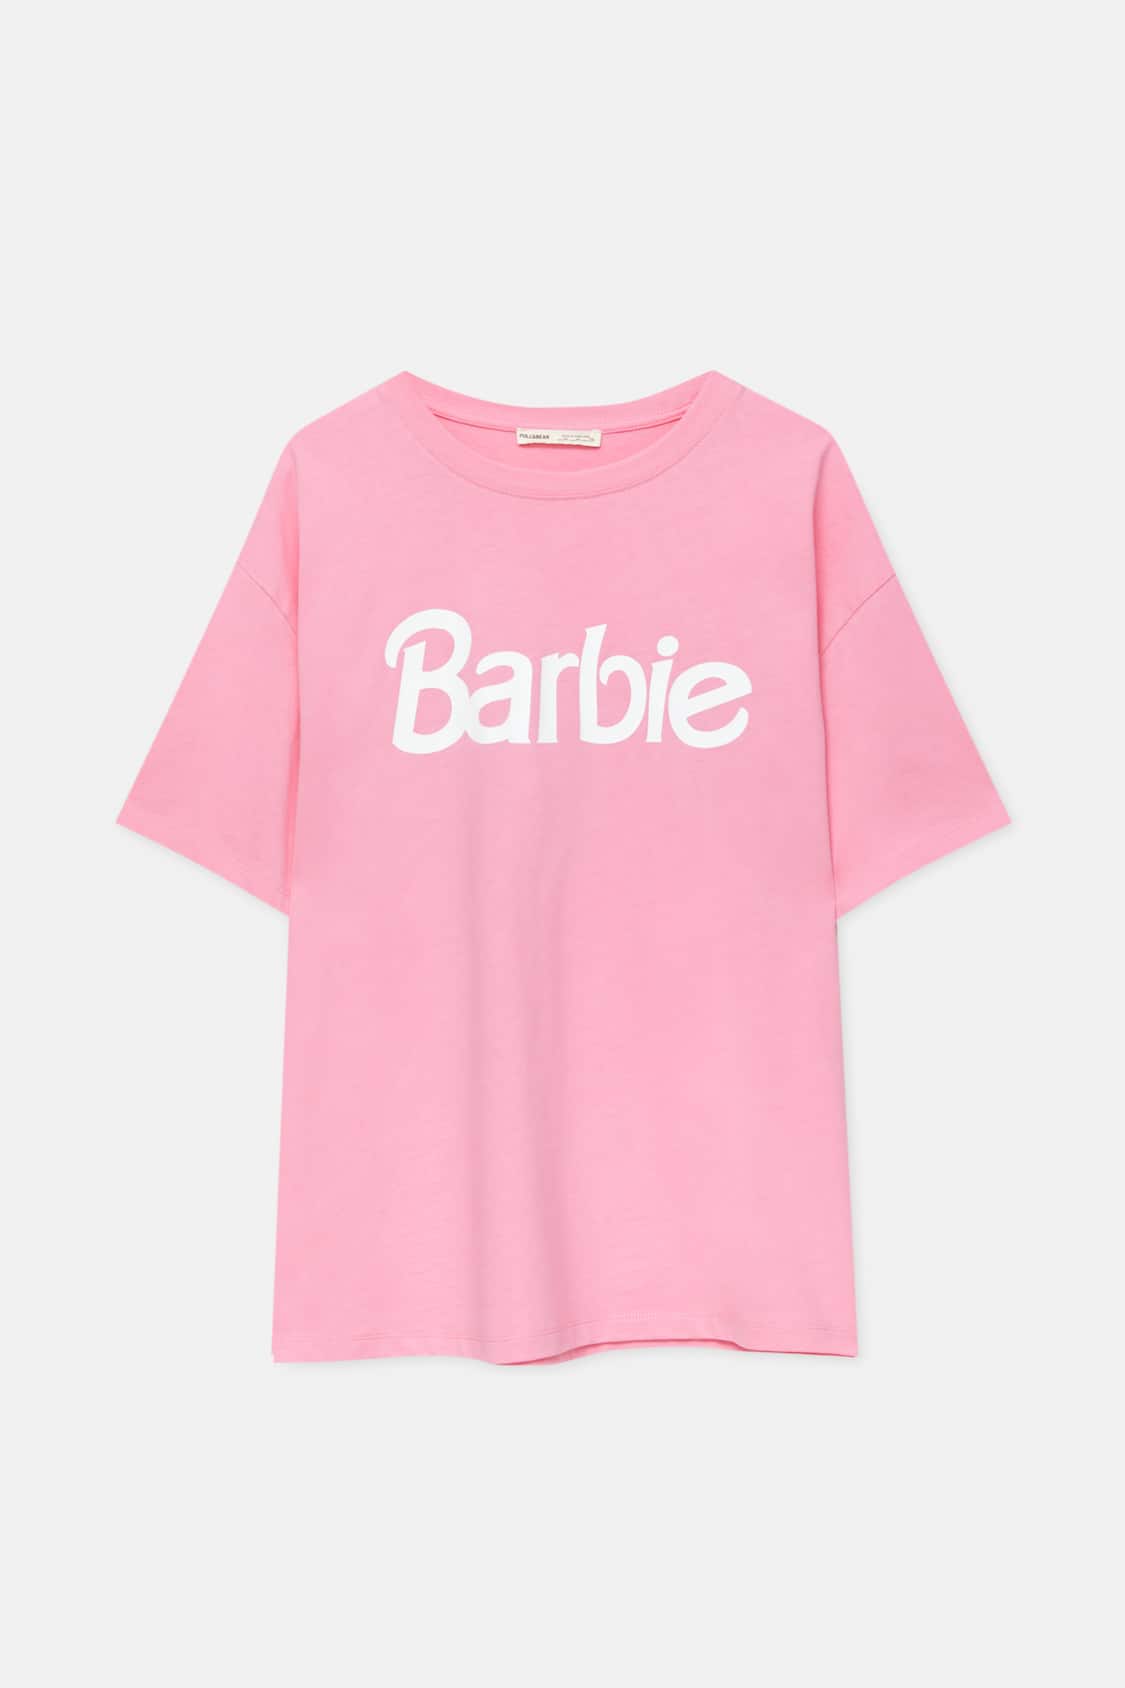 Womens ladies t shirt fashion BARBIE TEE LOGO S,M,L,XL PINK COTTON